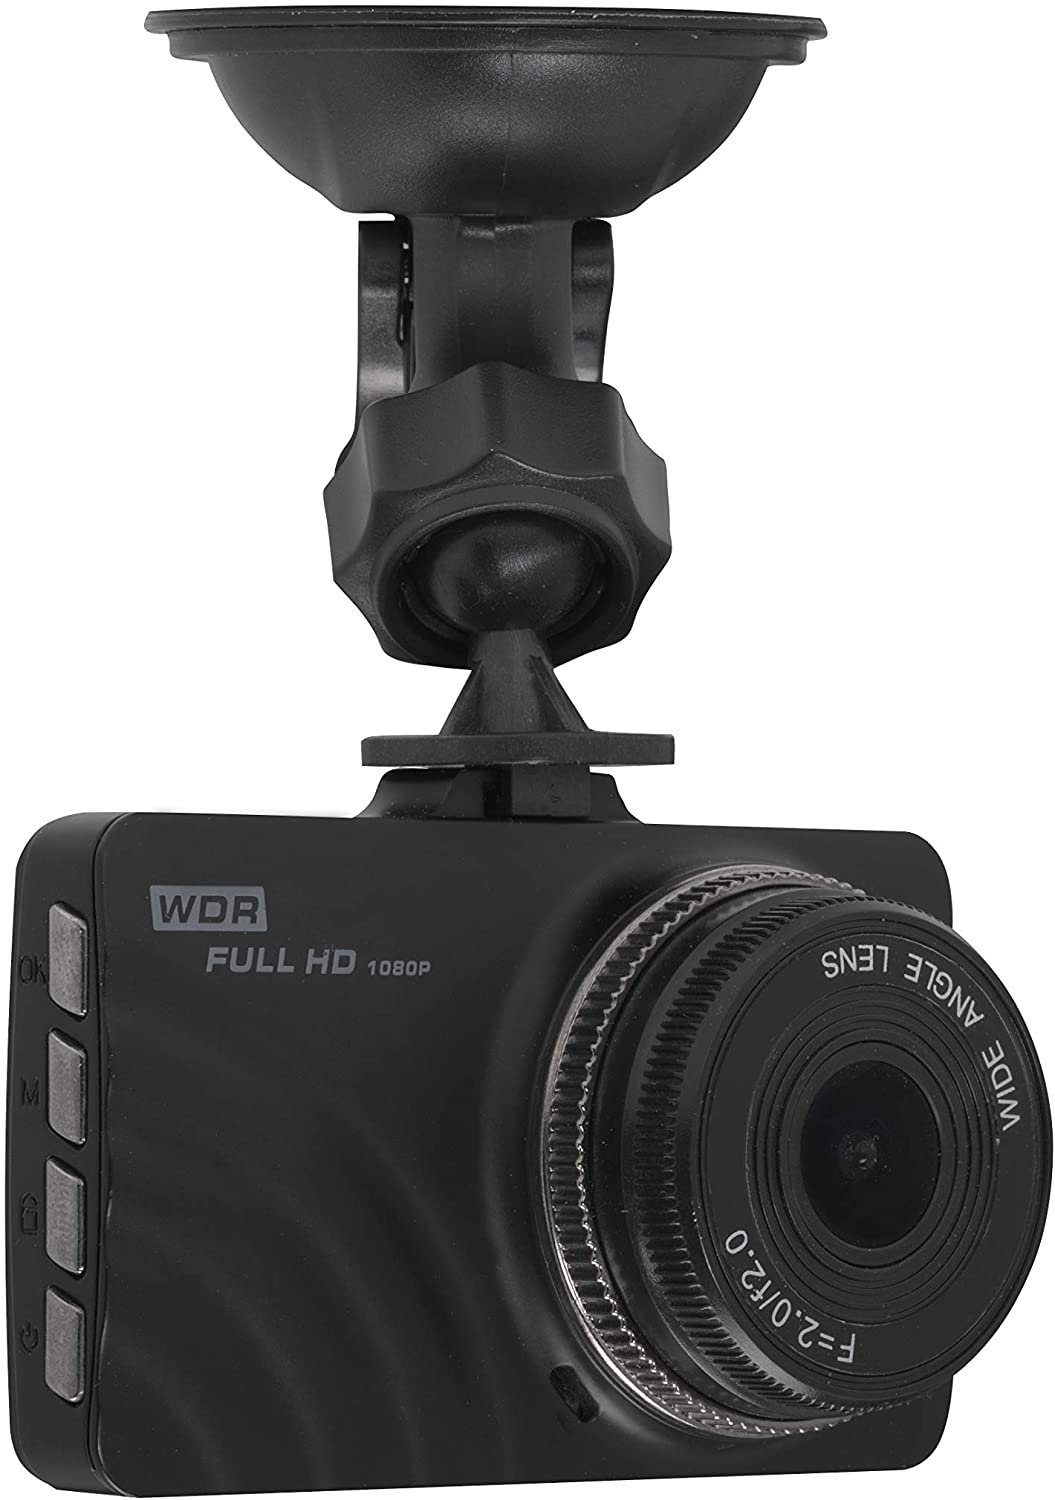 Display, Denver Schwarz G-Sensor Dashcam Kamera DENVER 12 Mikrofon (Full Auto MPixel HD) FULL-HD Dashcam